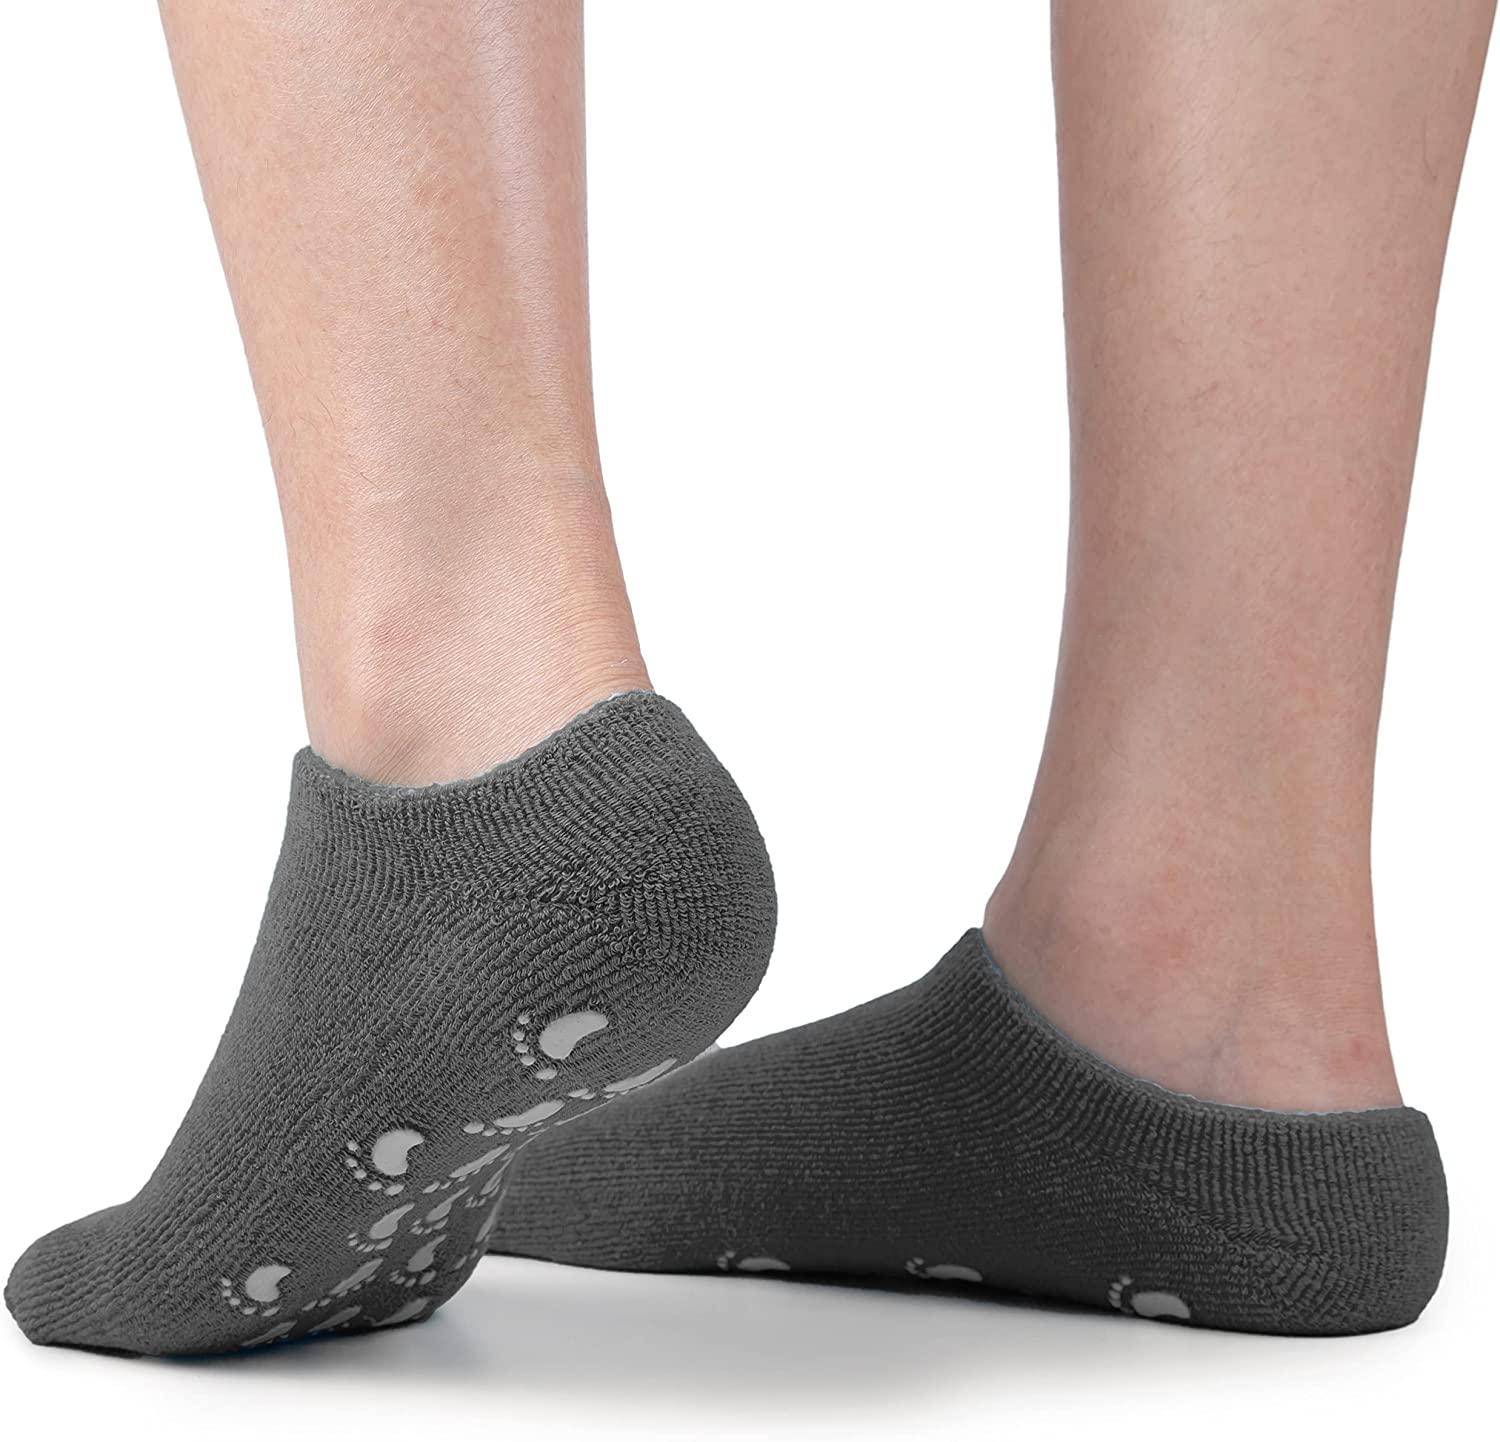 grippy socks – continuall